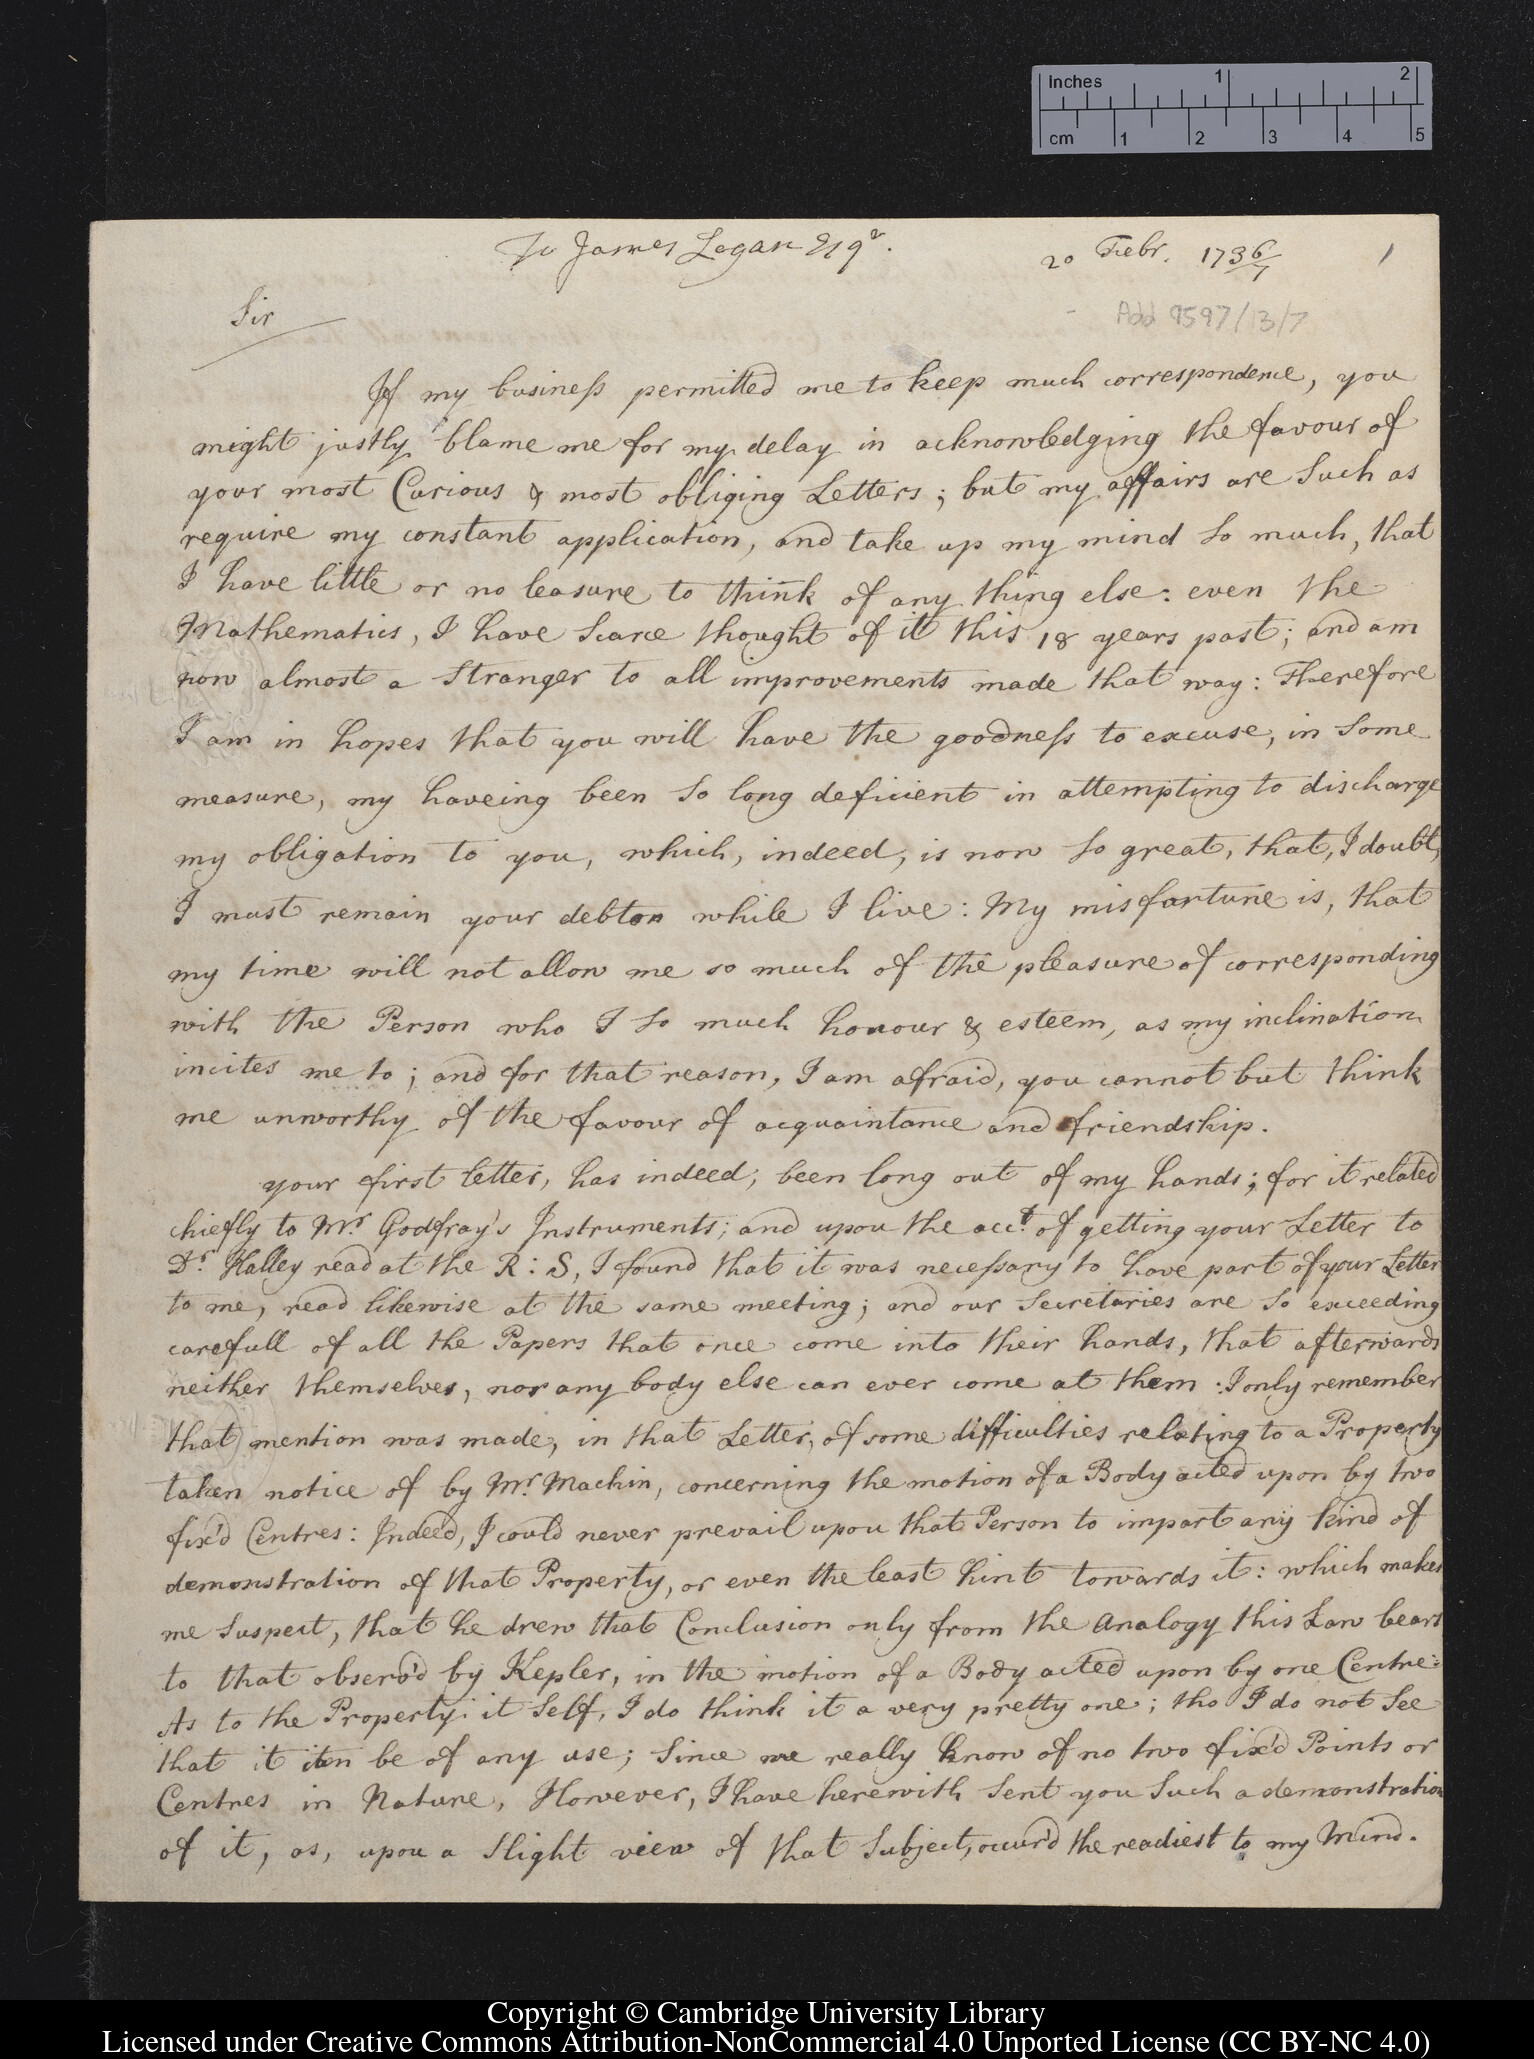 Letter from William Jones to James Logan